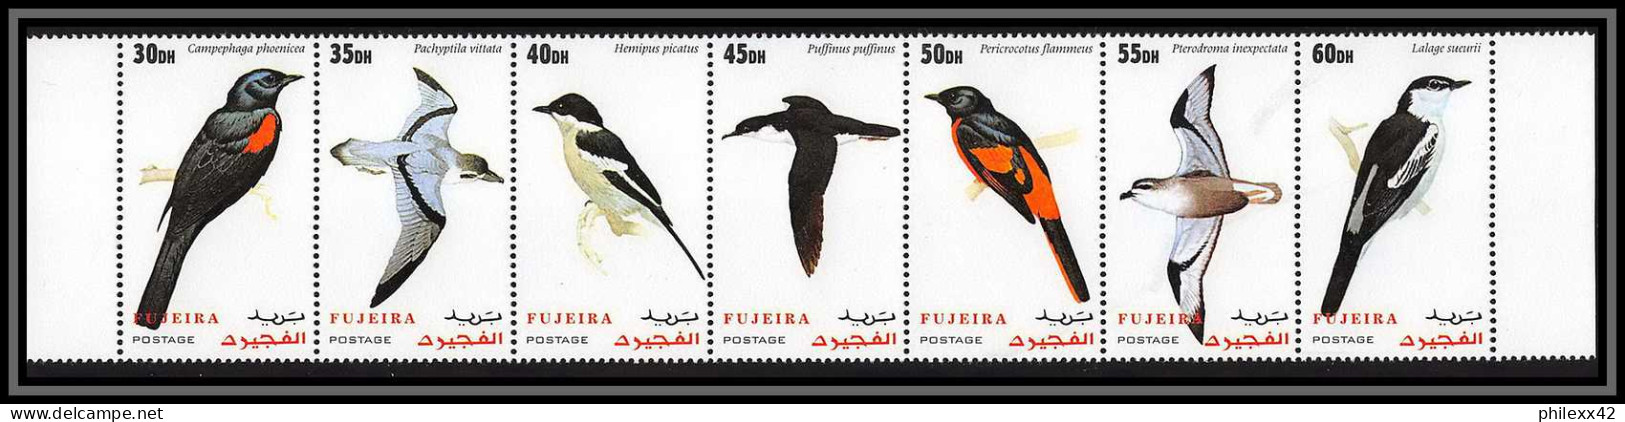 Fujeira - 1532b Bande + Série ** MNH Oiseaux Marin Puffinus Pericrocotus Passereaux Lalage Bird Seabirds NON EMIS RR - Konvolute & Serien